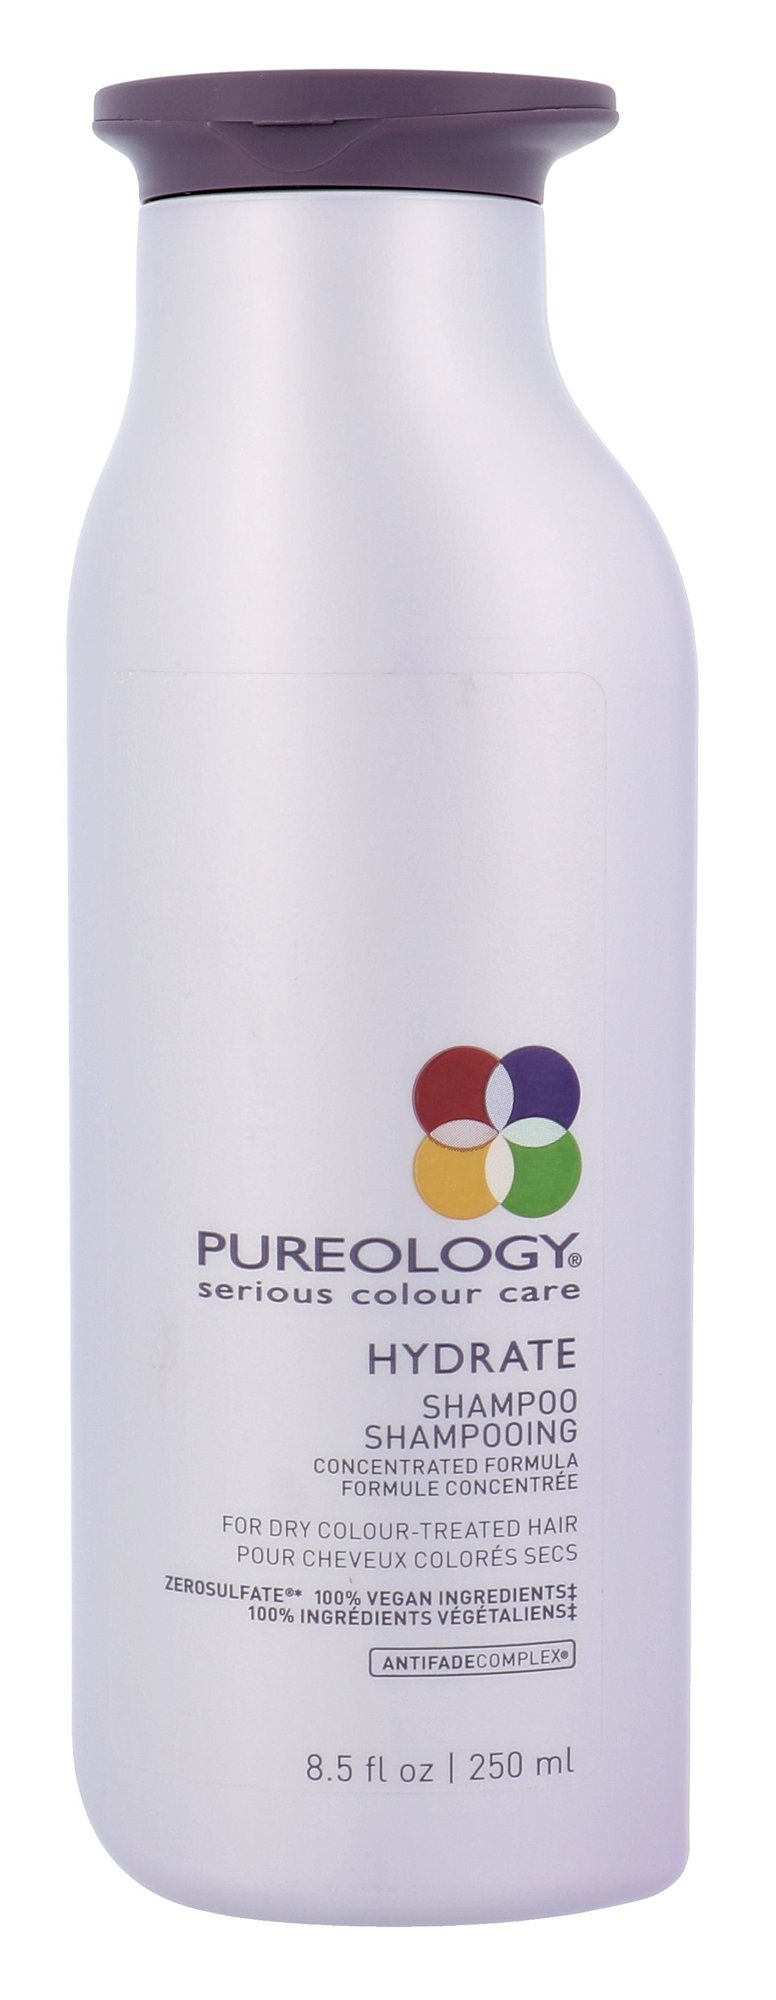 Redken Pureology Pure Hydrate Shampoo